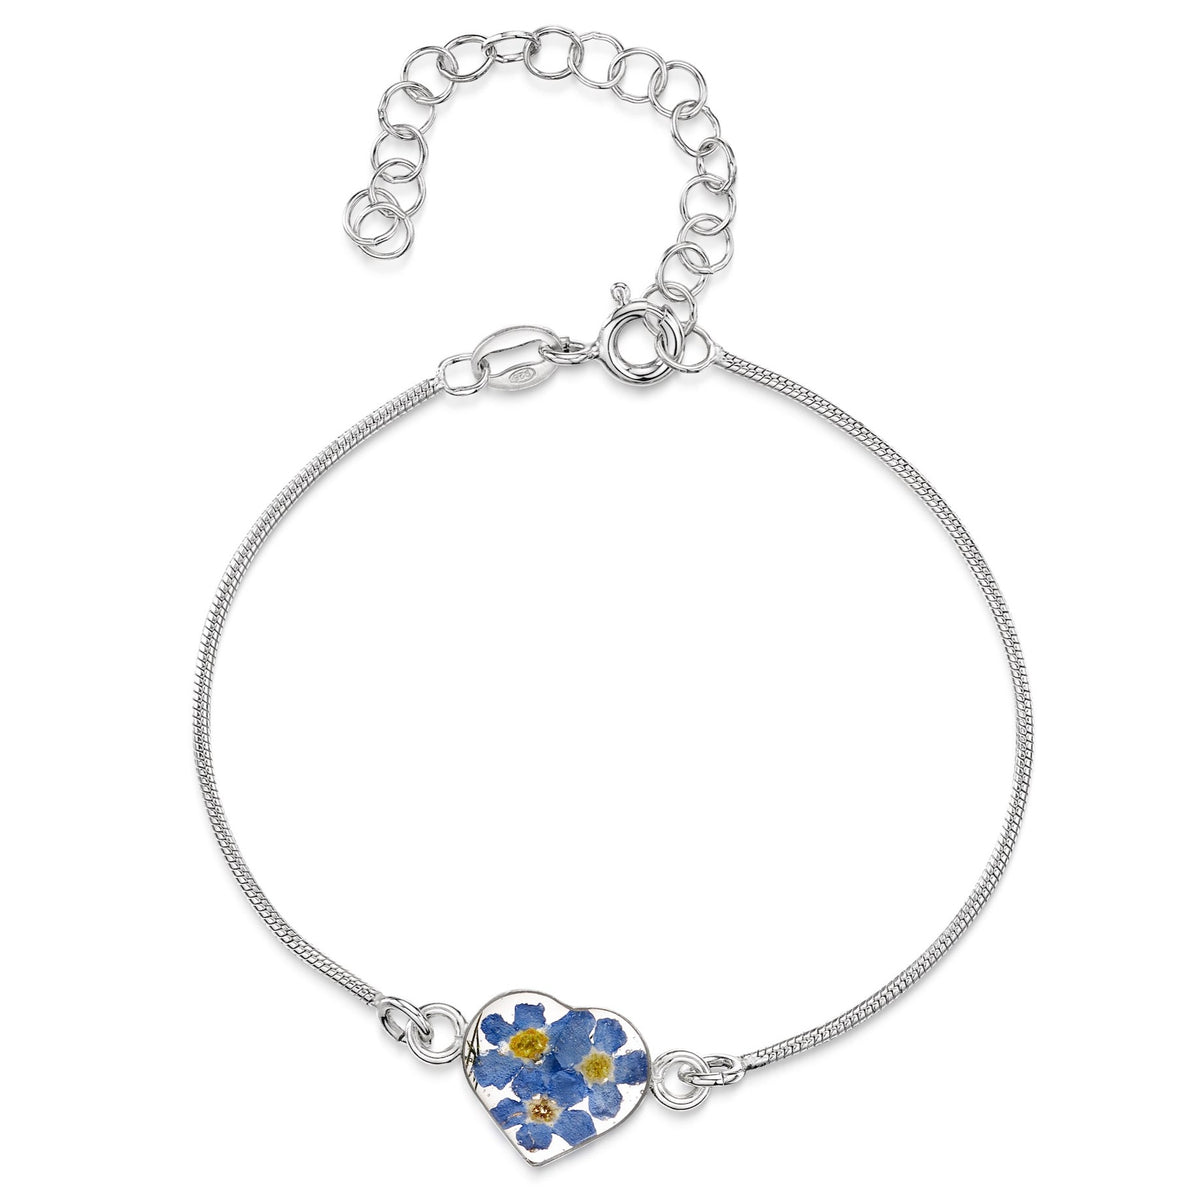 Forget-me-not silver heart snake chain bracelet